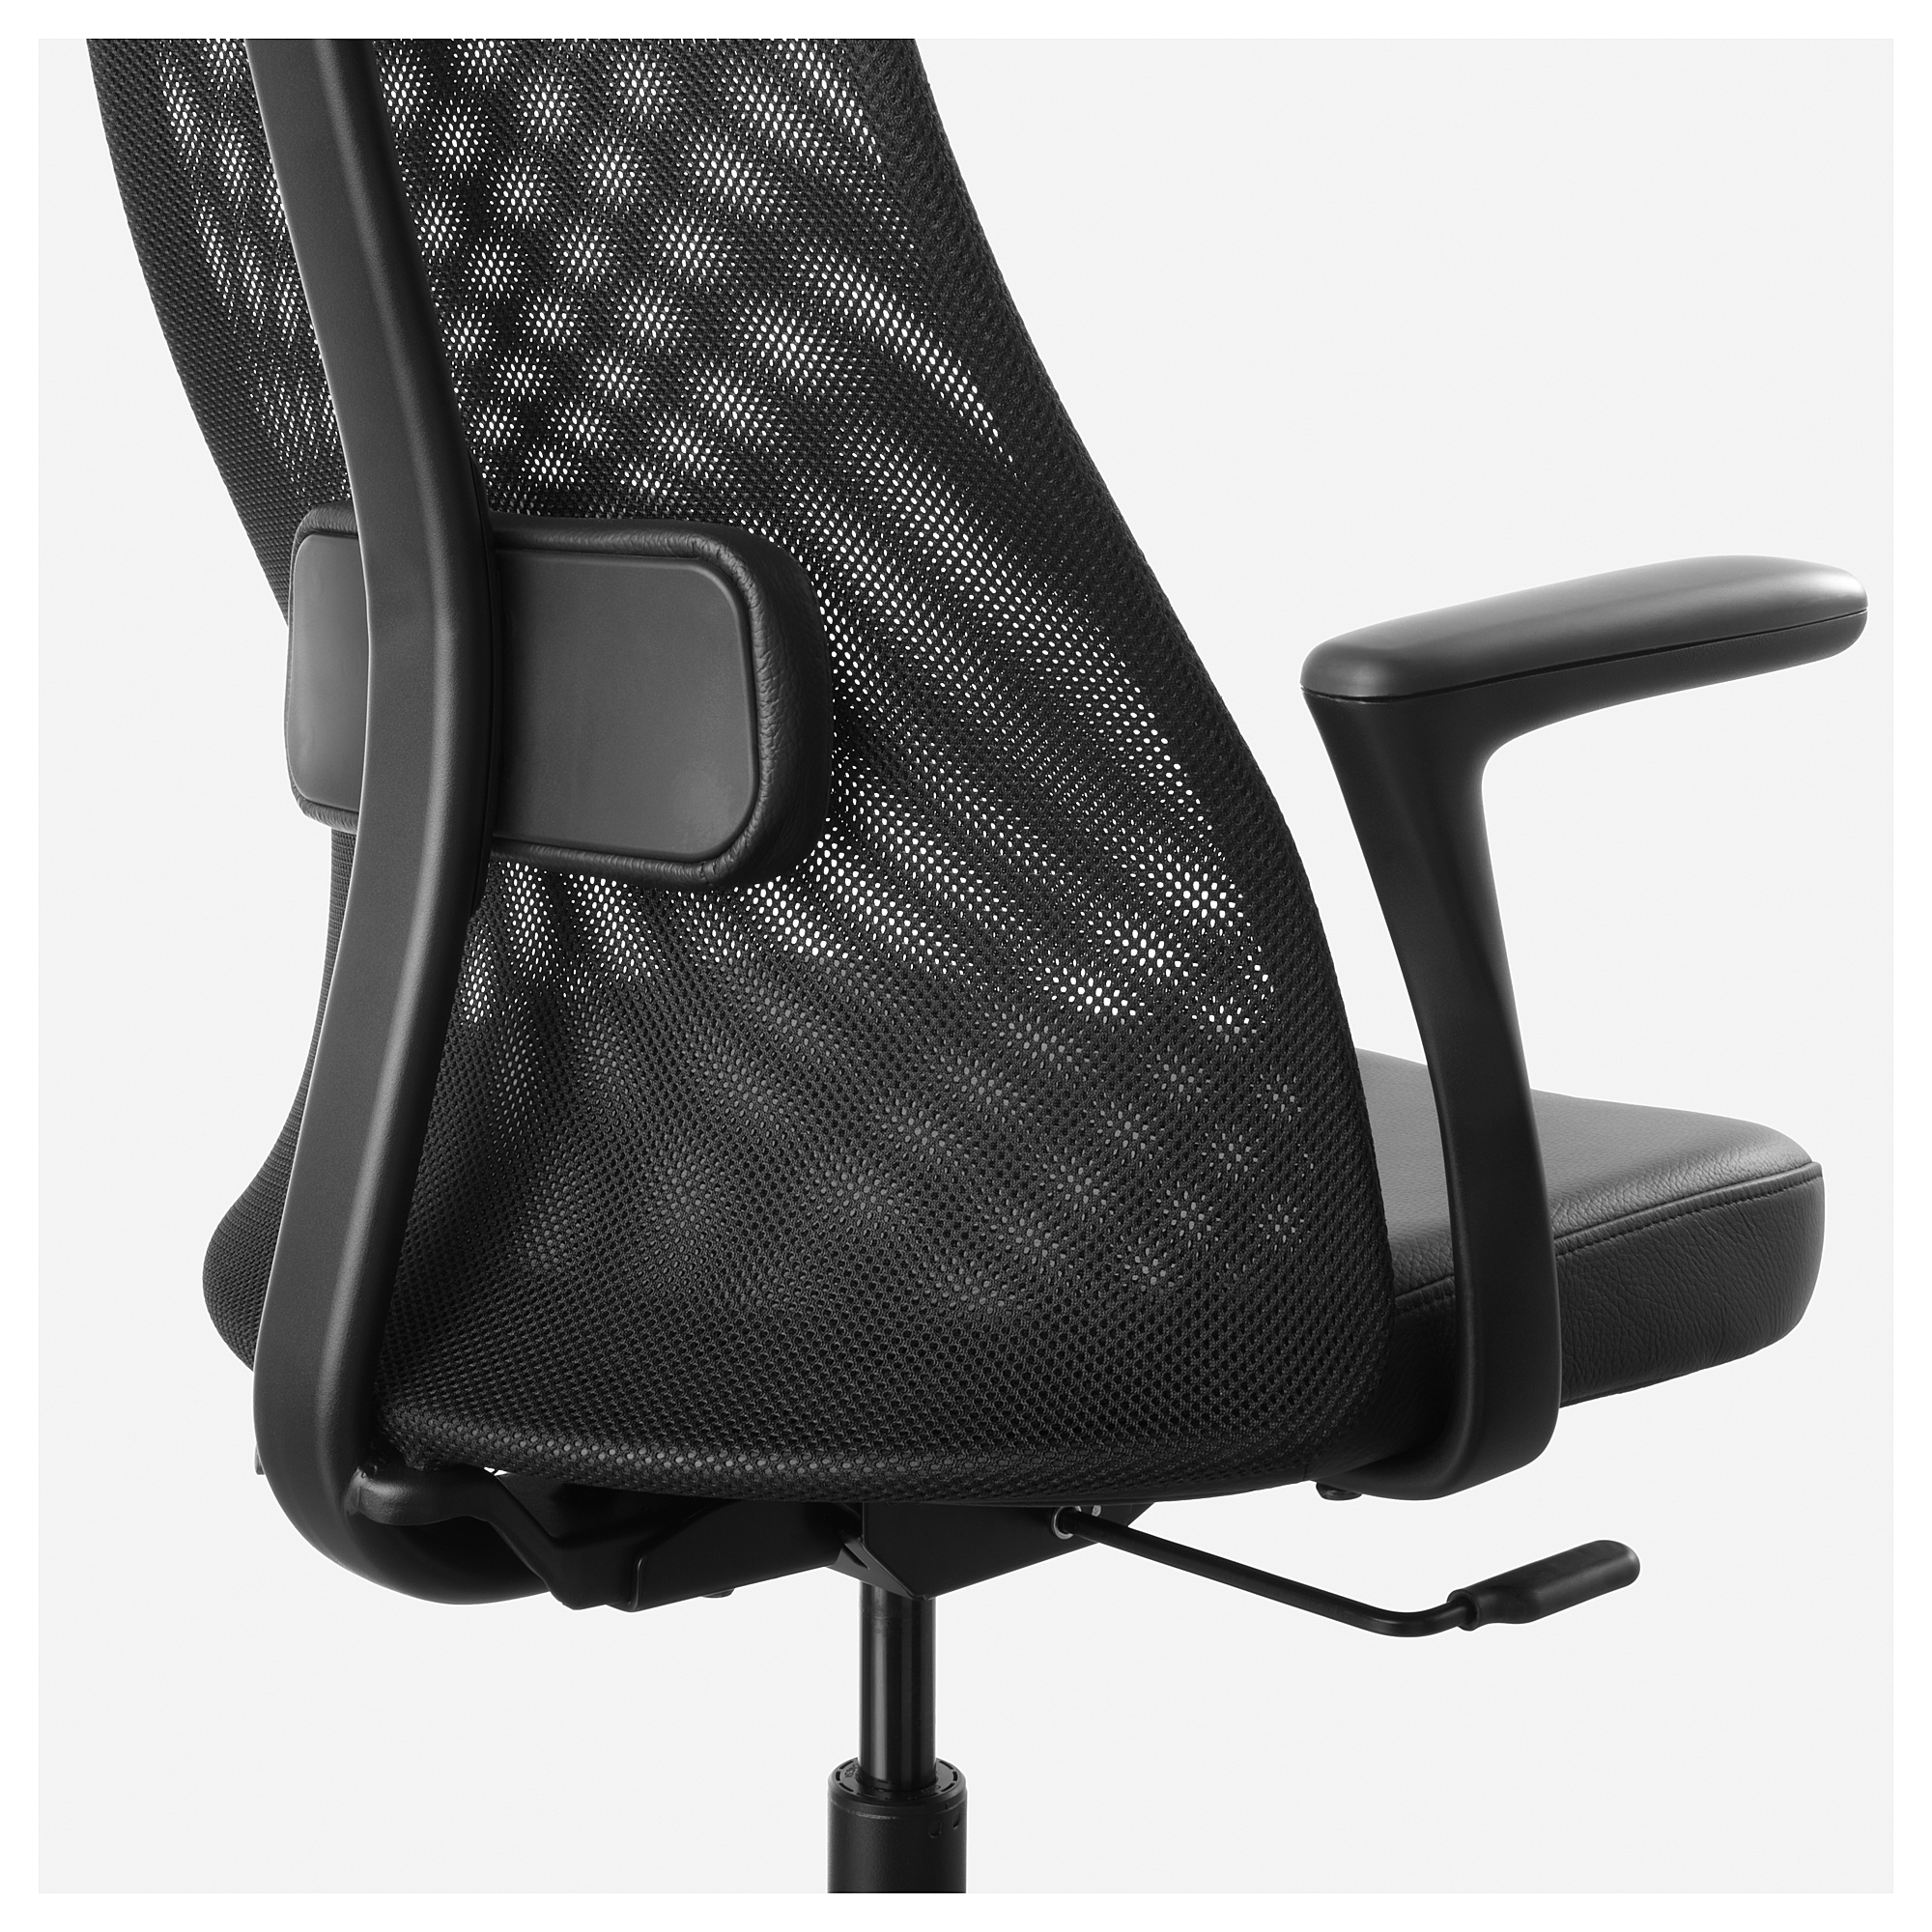 JÄRVFJÄLLET - office chair with armrests, Glose black | IKEA Hong Kong